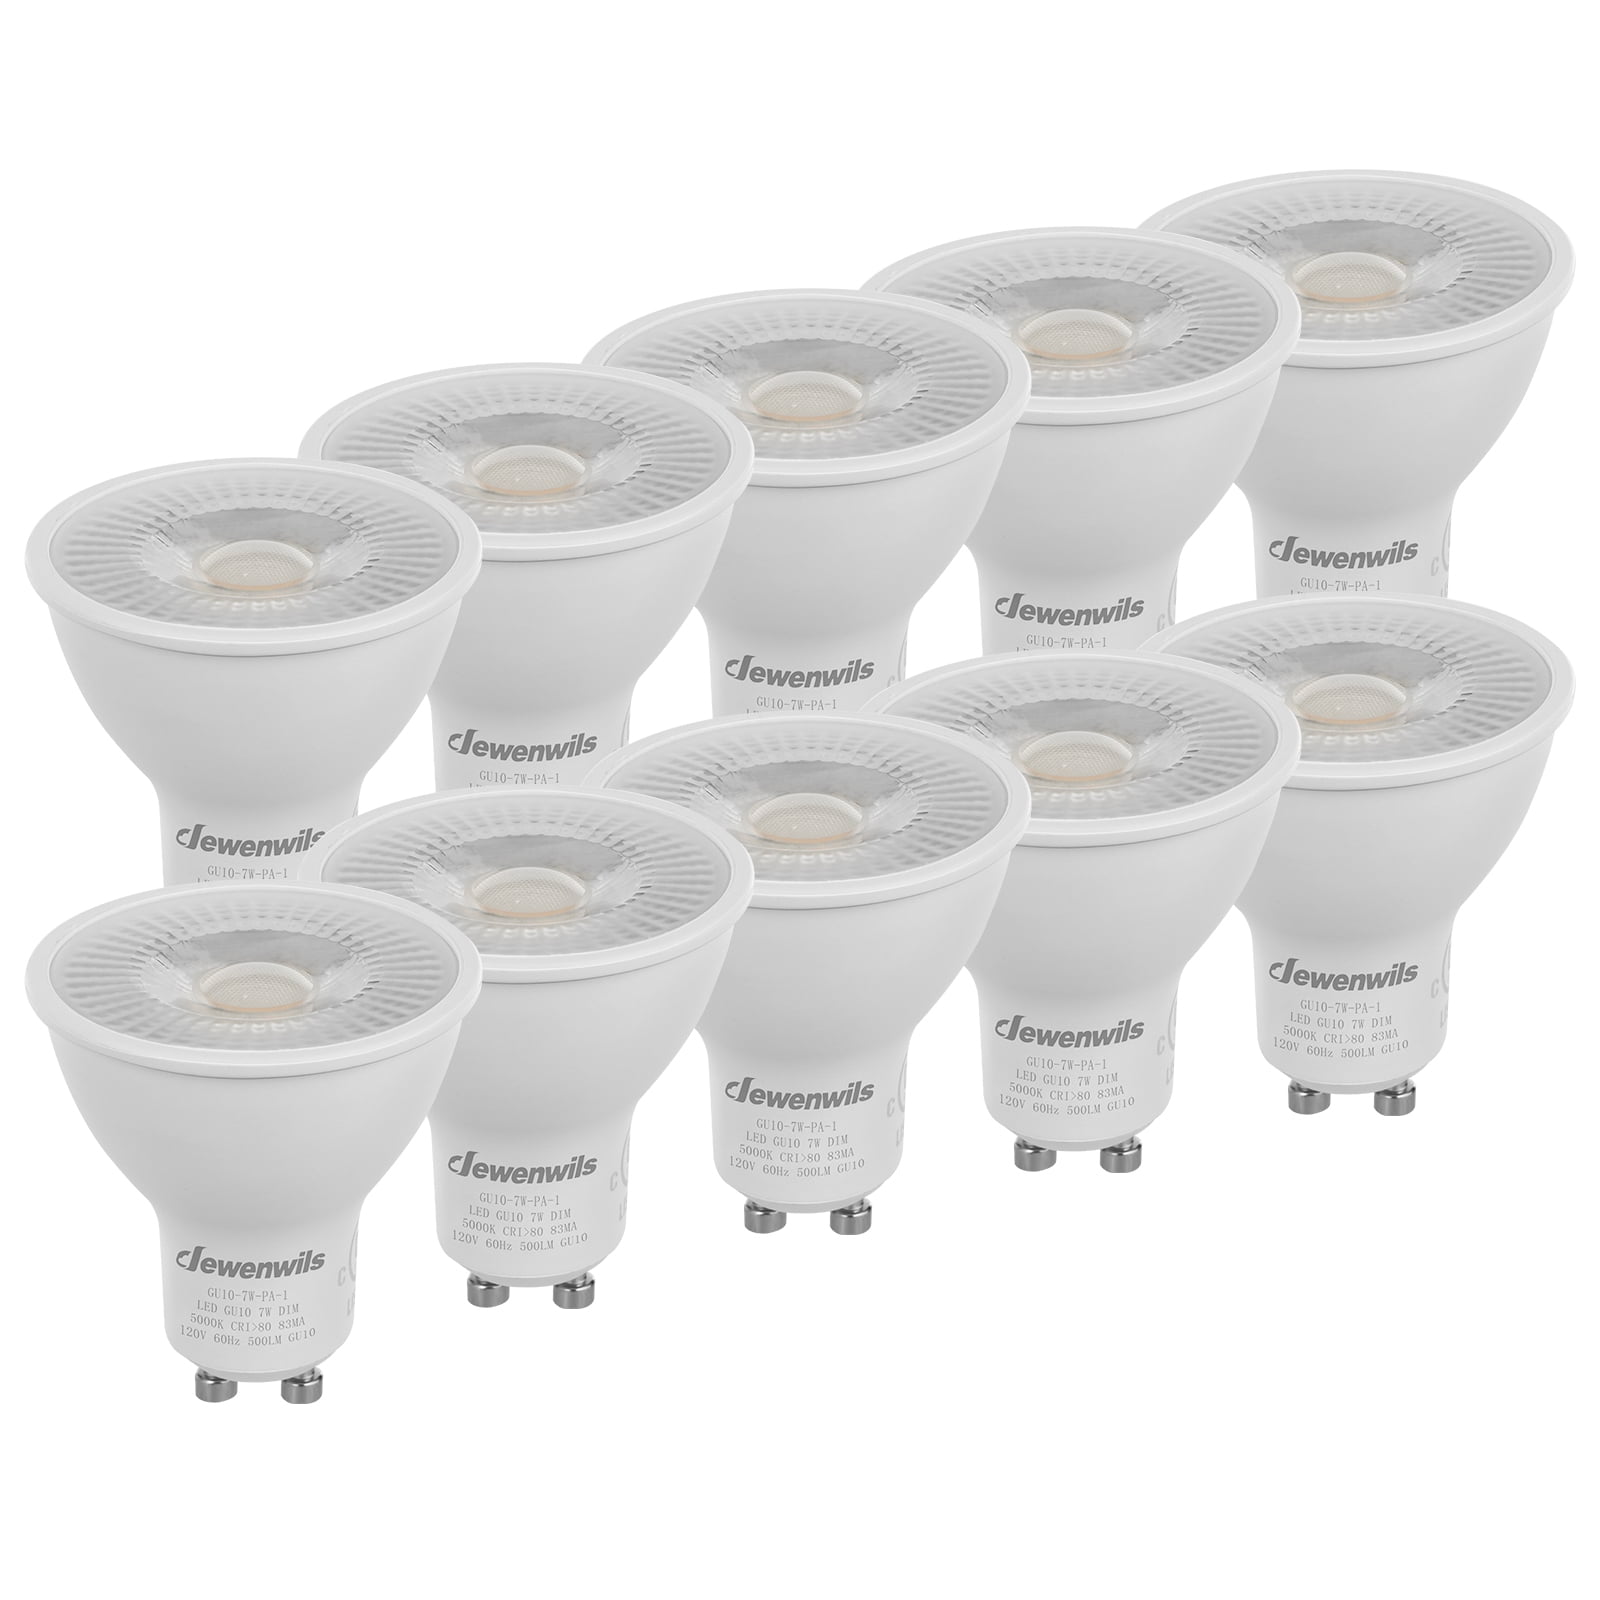 DEWENWILS 10-Pack GU10 LED Bulb Dimmable, 500LM, 3000K Warm White